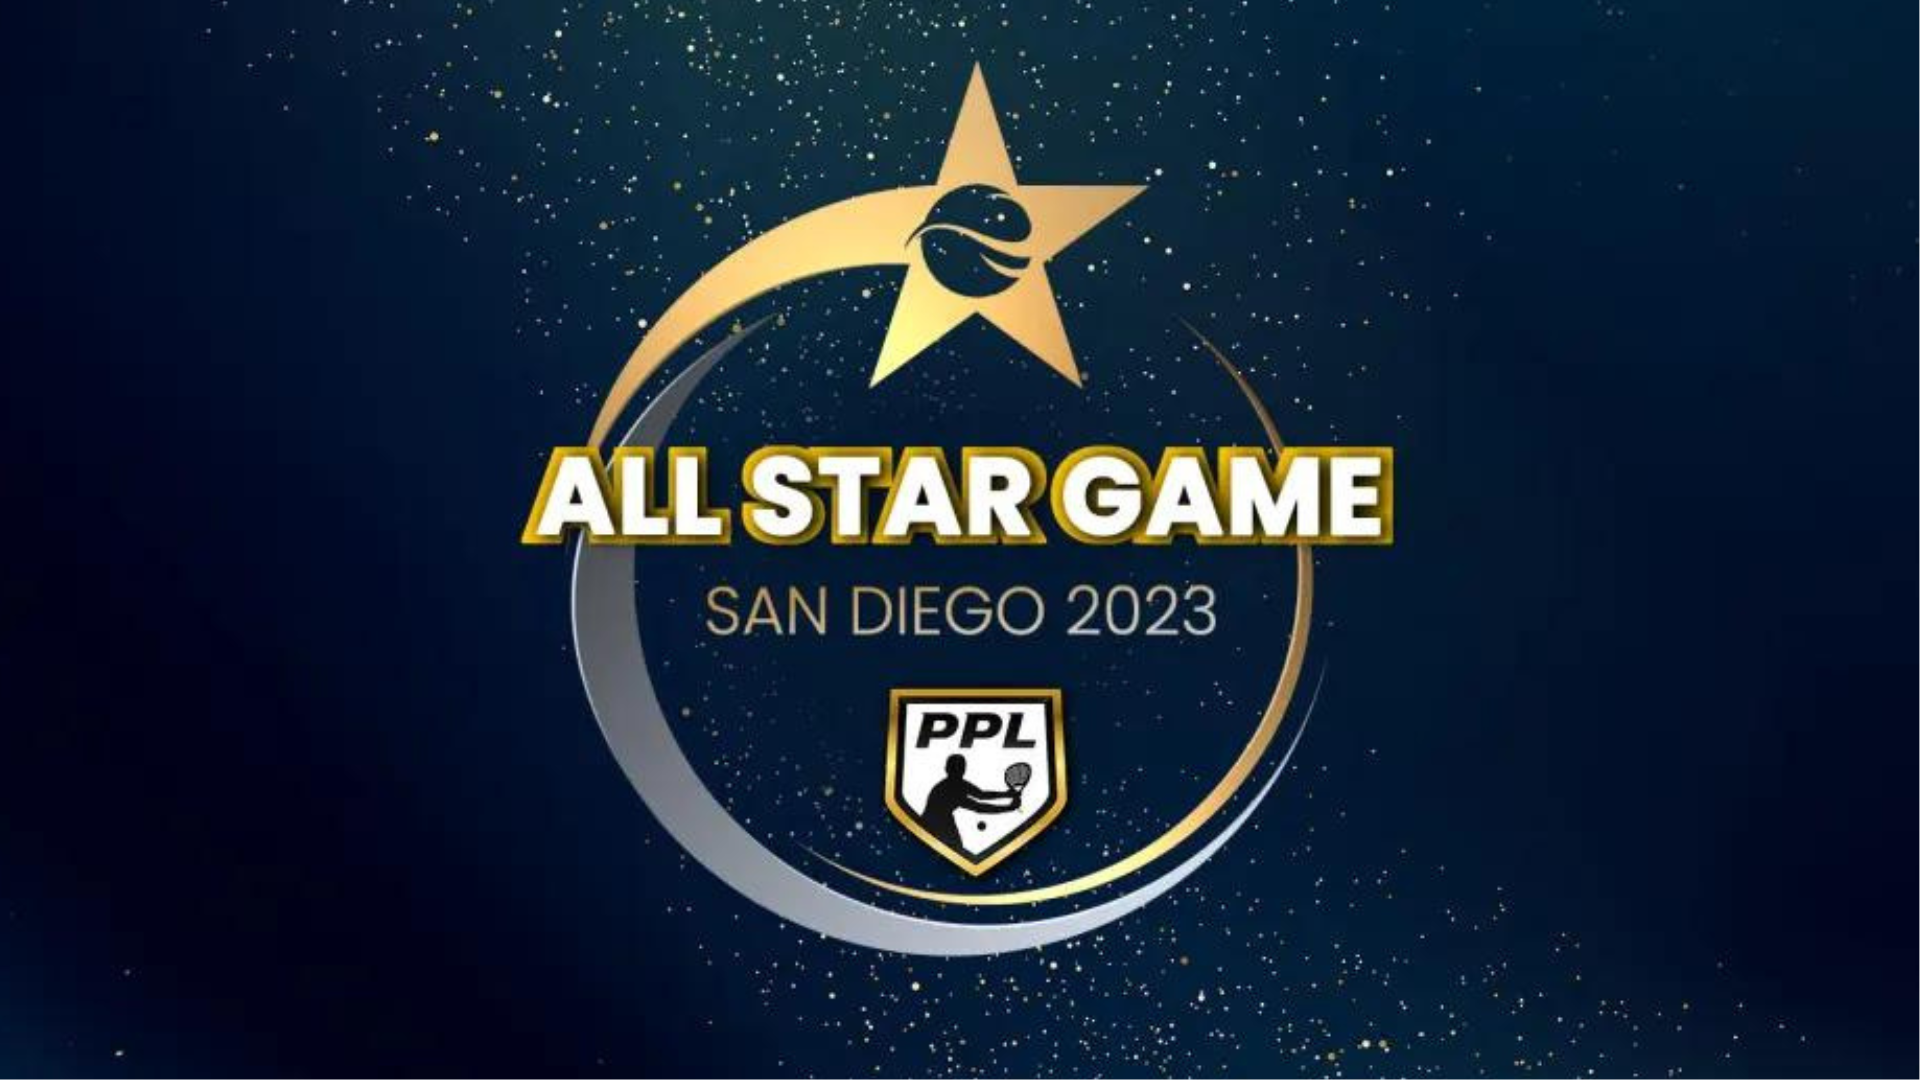 All Star Game PPL 2023 USA San Diego